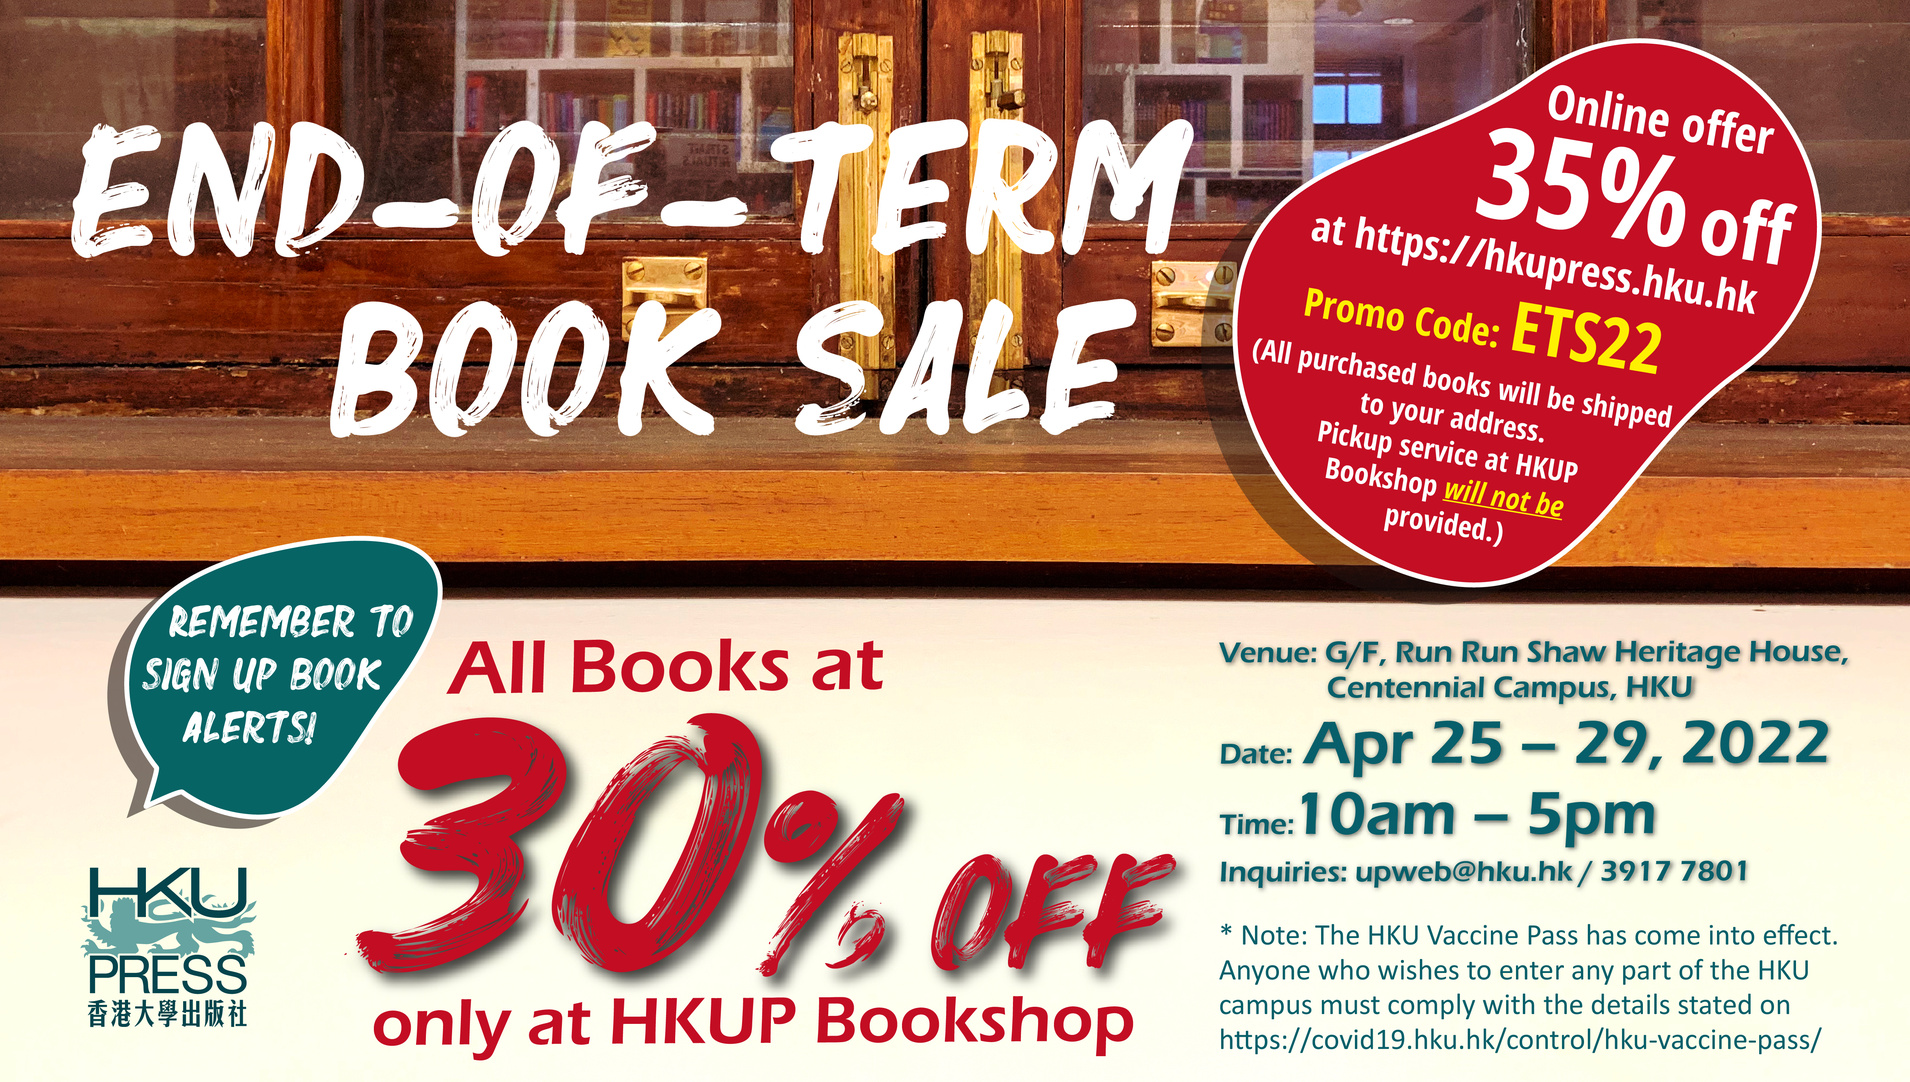 HKUP Bookshop Book Sale